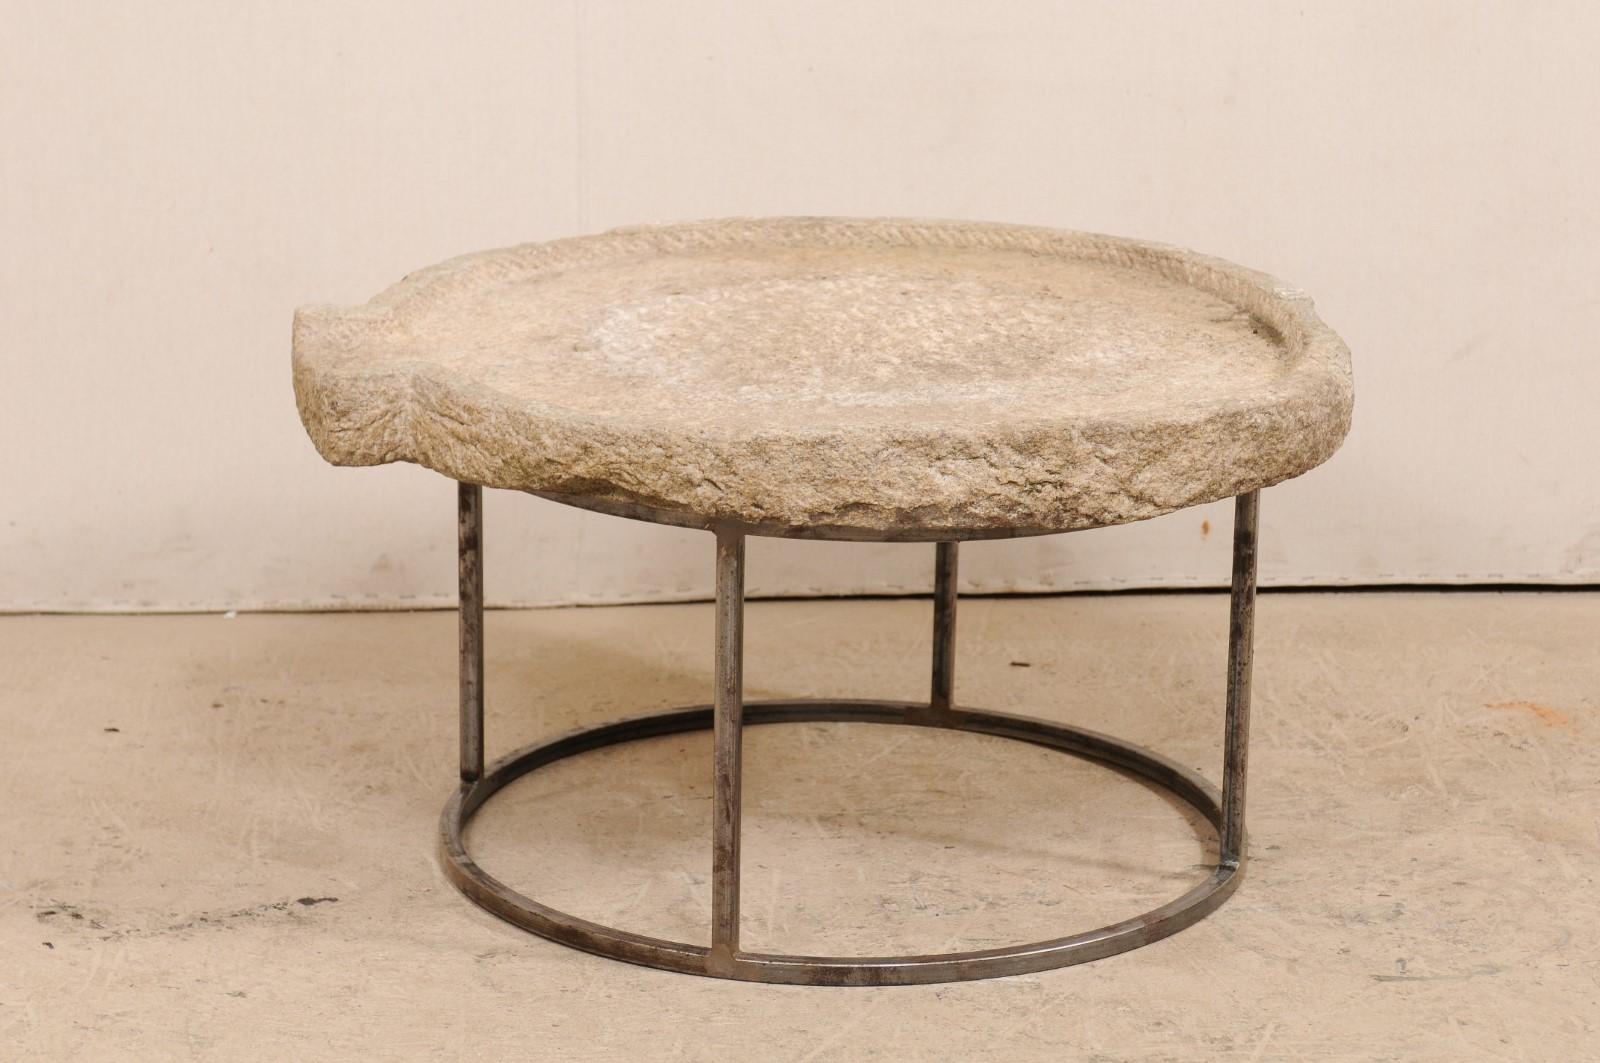 Rustic 19th Century Mediterranean Stone Olive Oil Trough Table on Custom Base